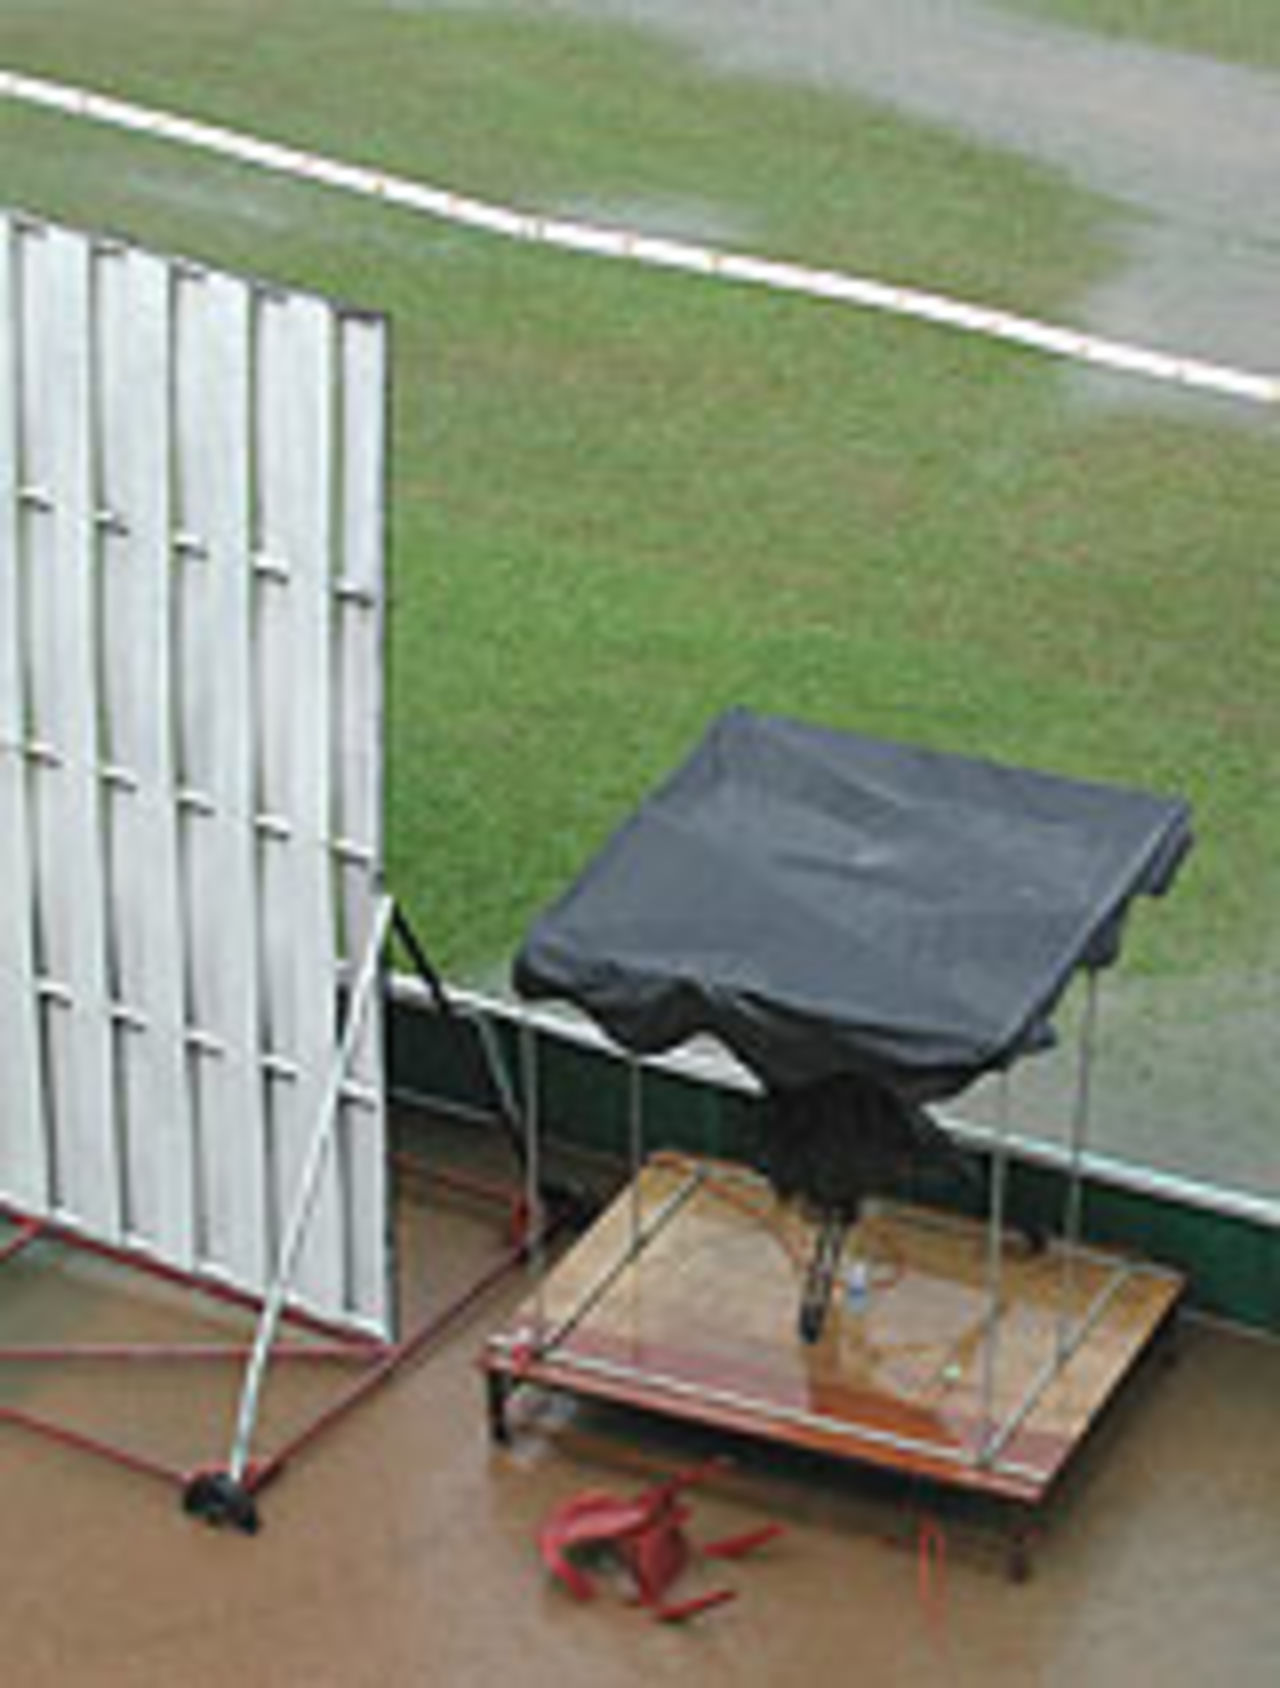 The very wet scene at the Premadasa stadium, Colombo 23 Nov 2003